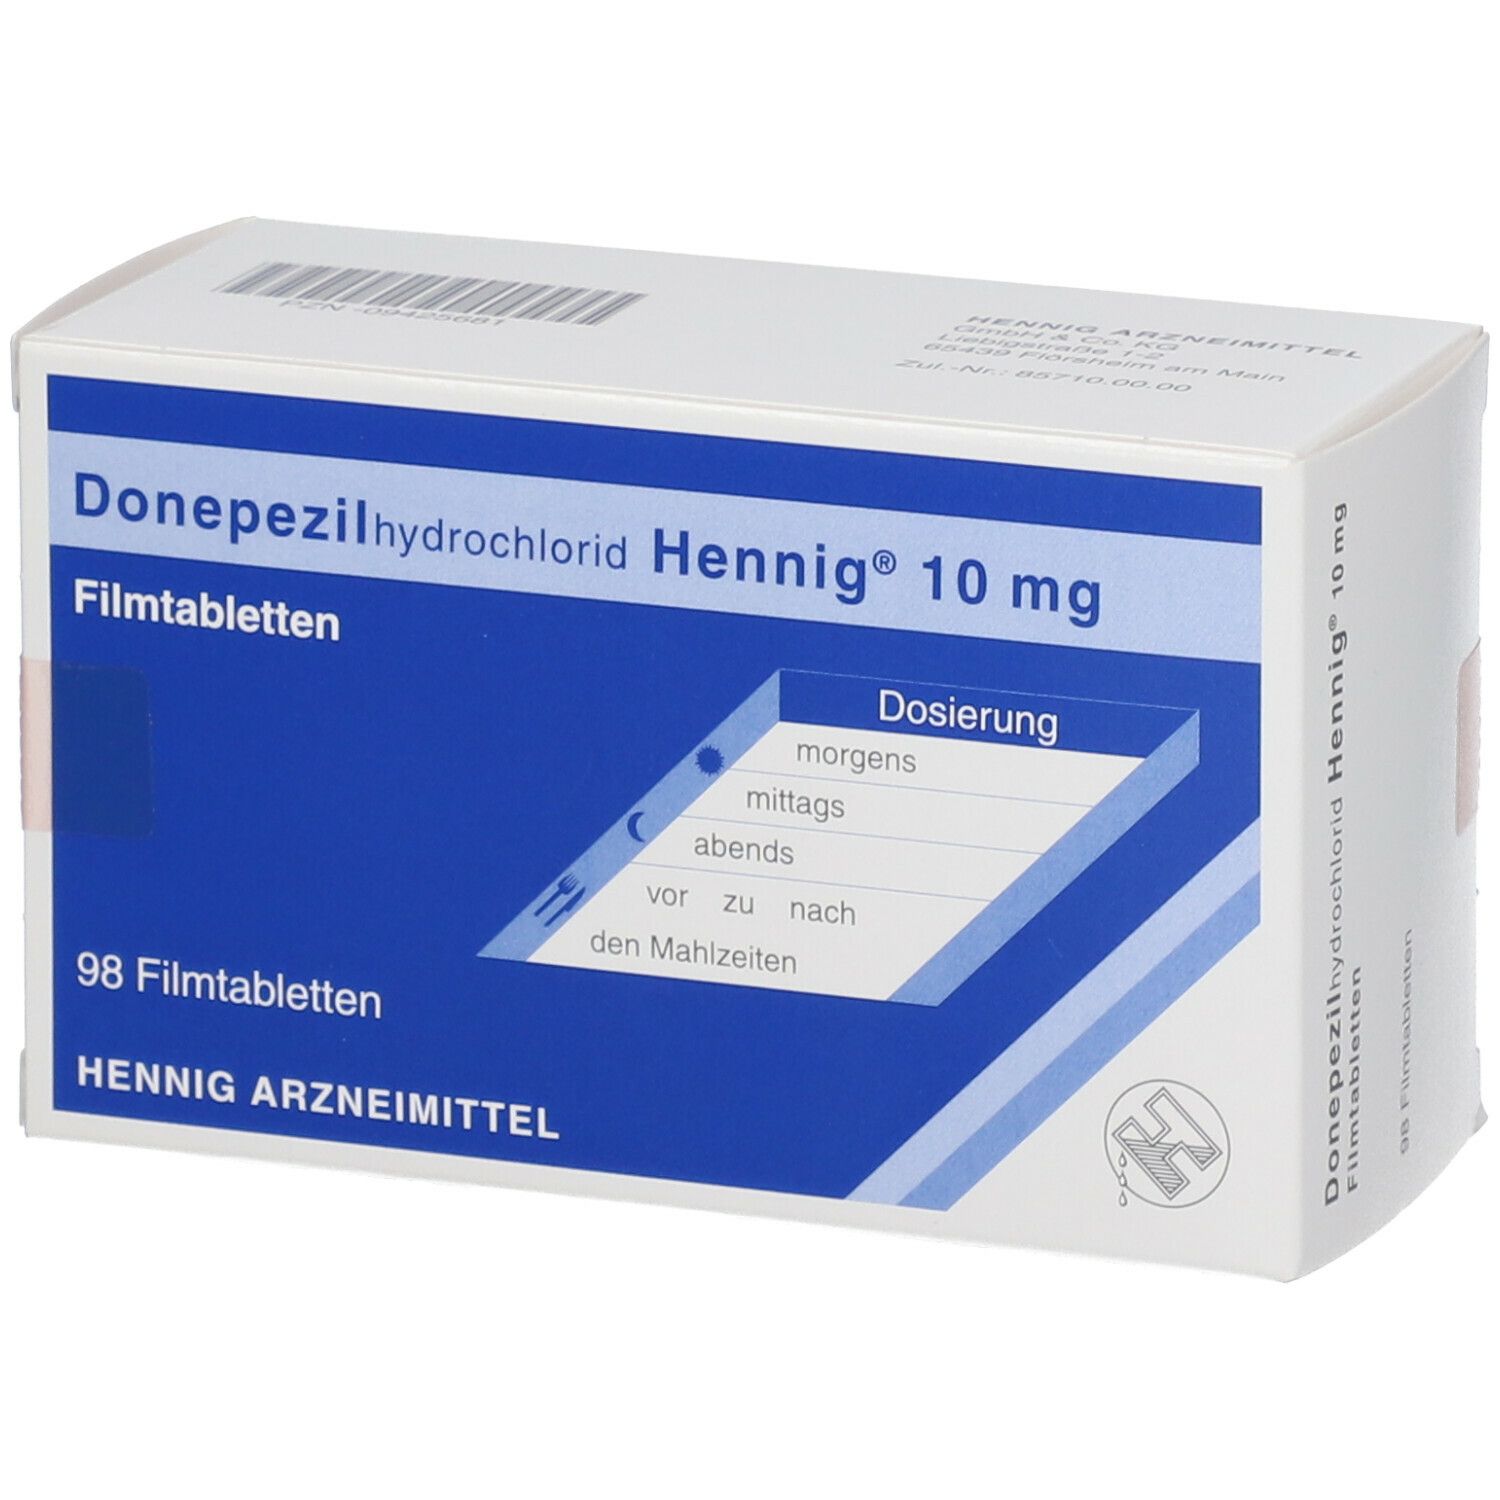 Donepezilhydrochlorid Hennig® 10 mg